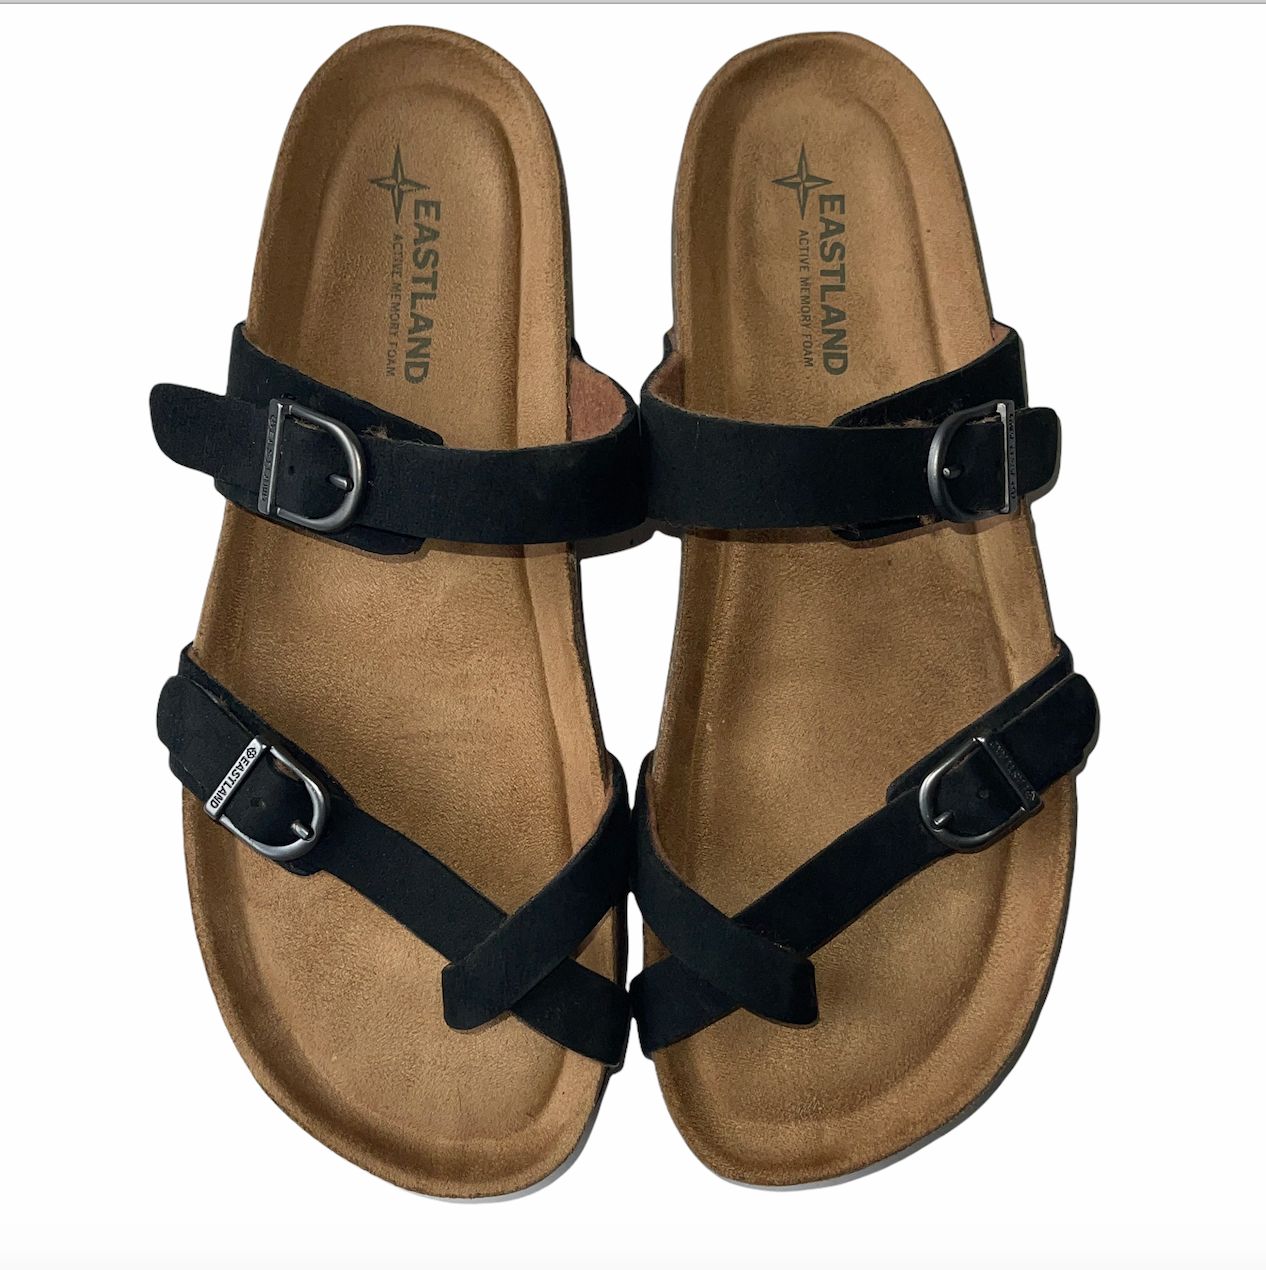 Eastland Womens Tiogo Black Leather Strap Sandals Shoes Size 9 Excellent - $31.99